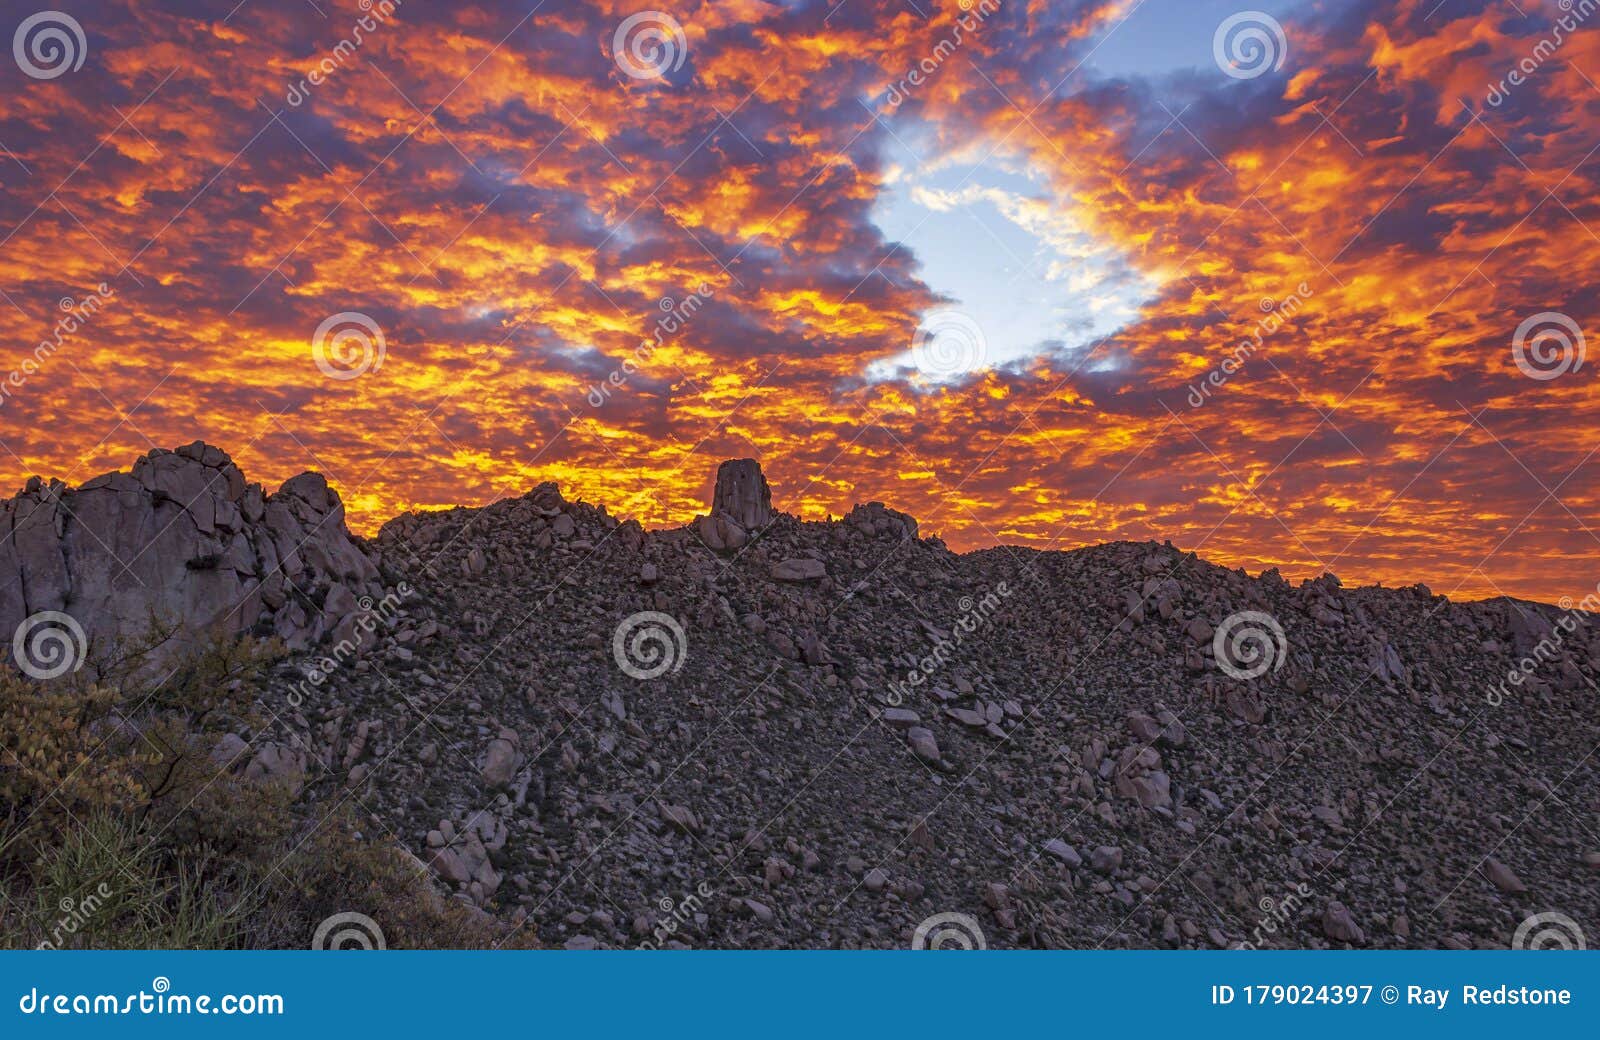 Sky pics arizona Sedona 2022: